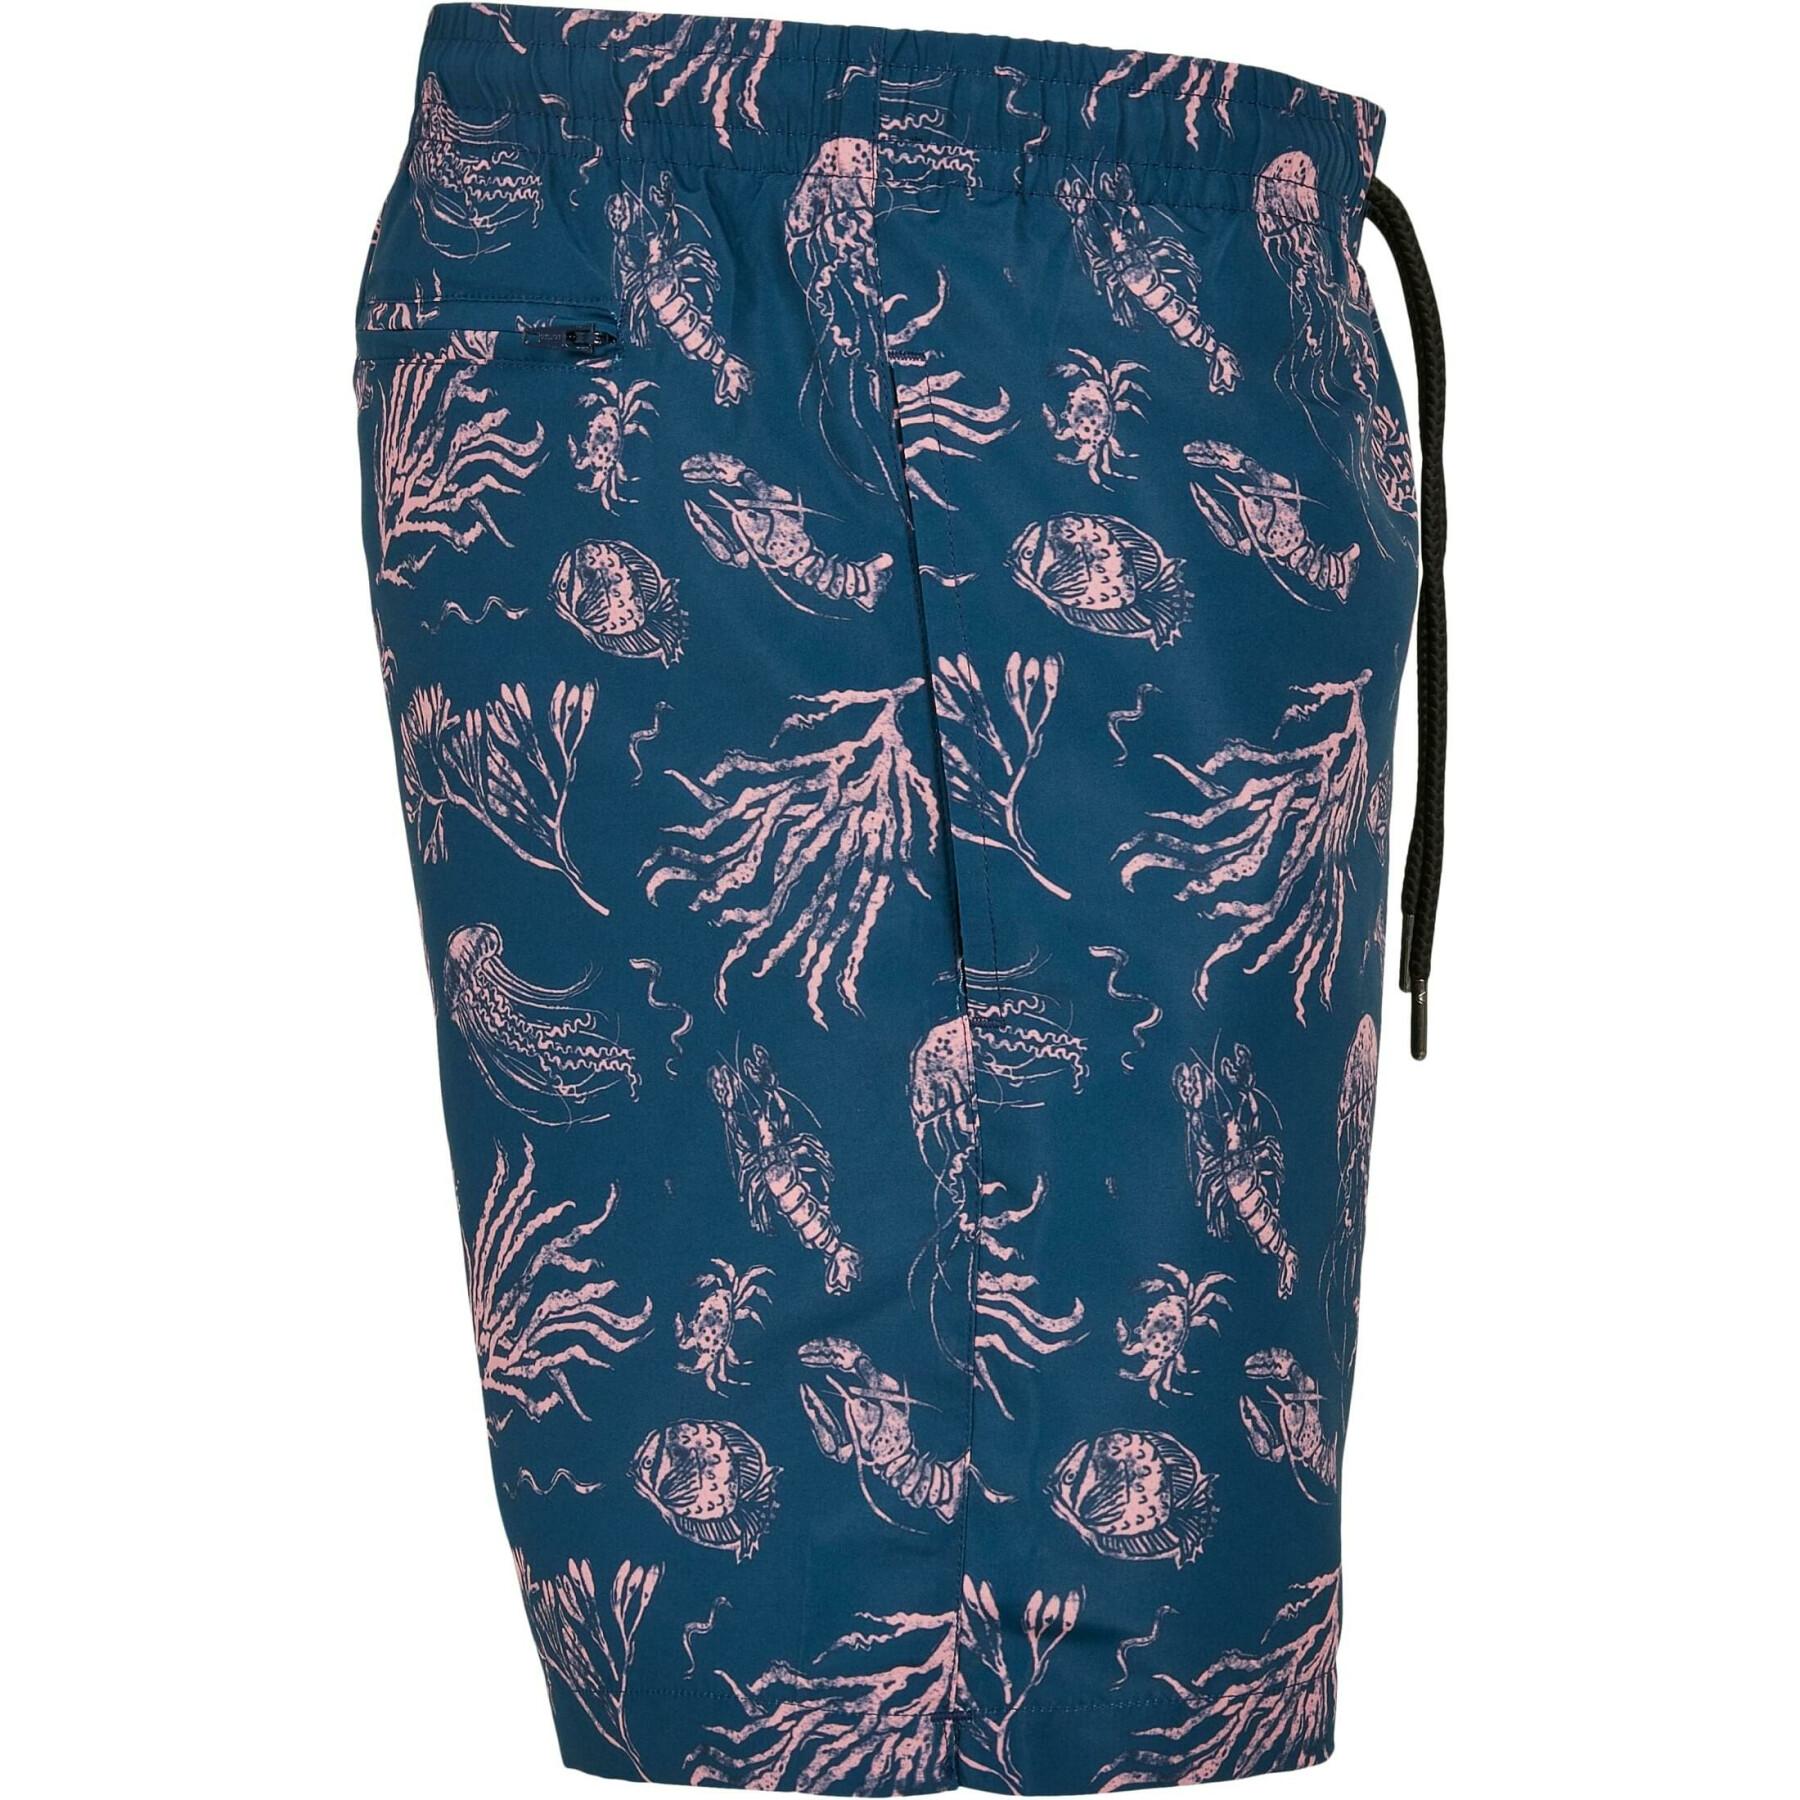 Swim shorts with pattern Urban Classics